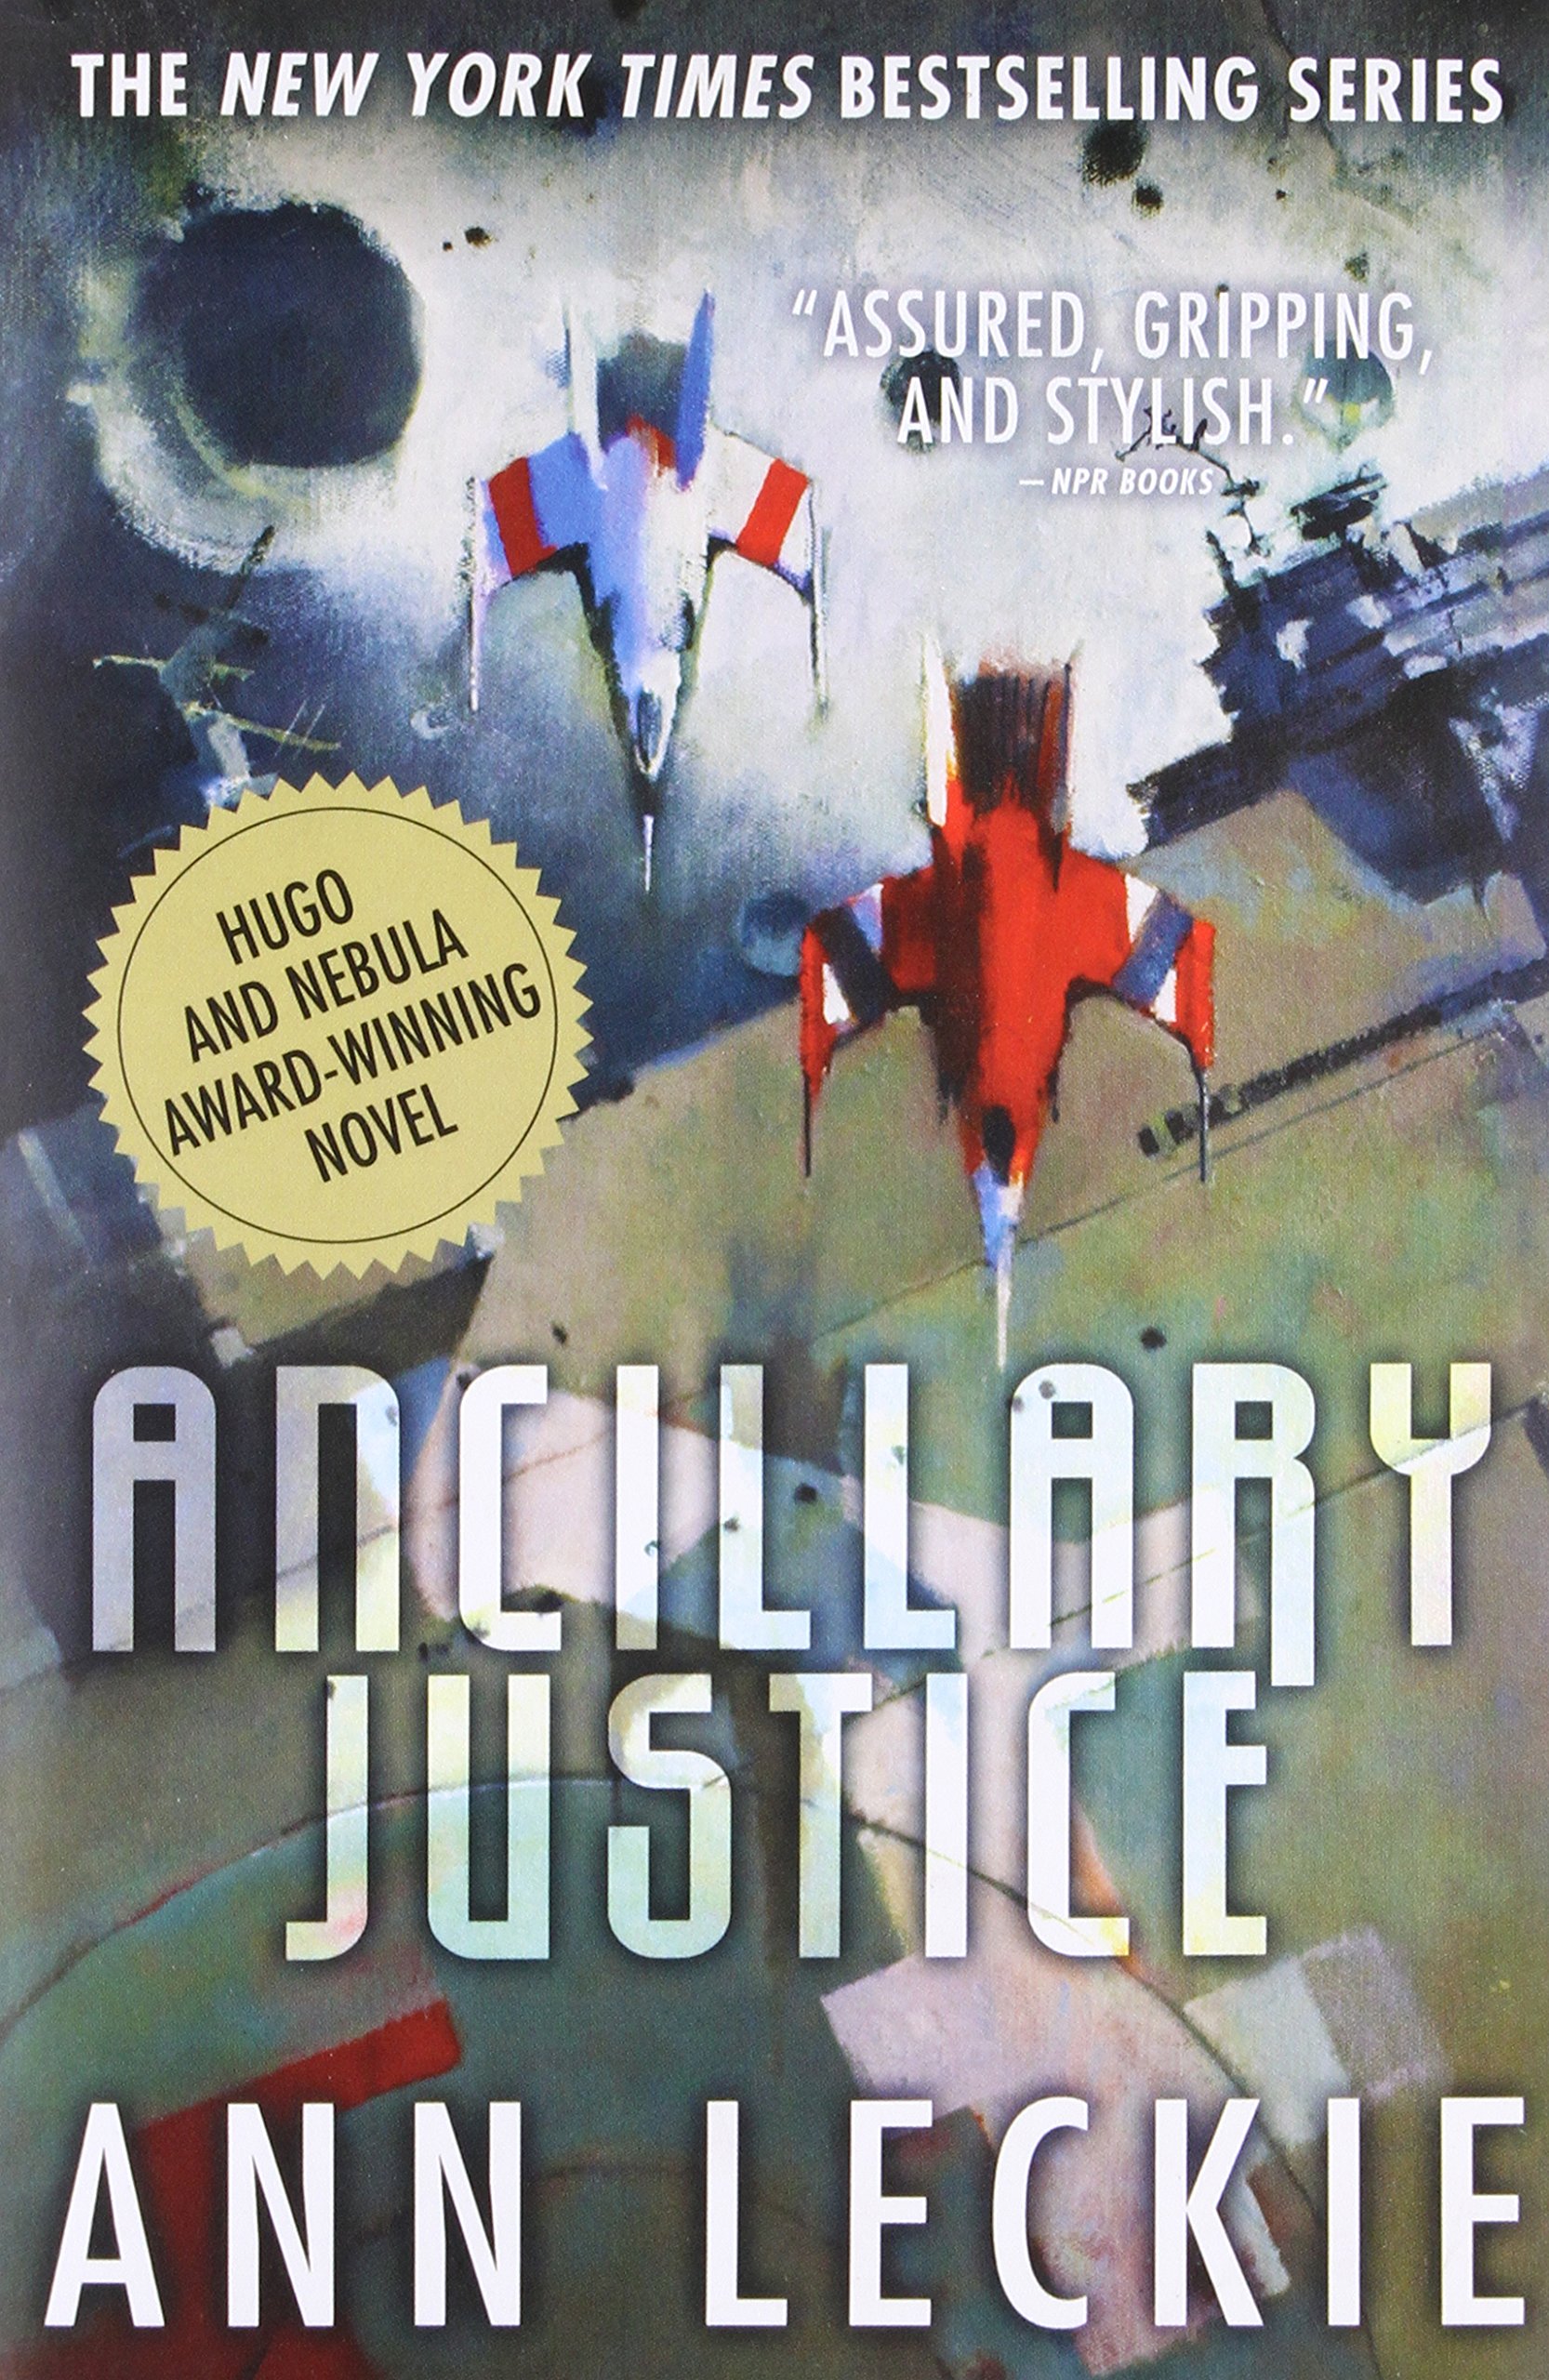 Ann Leckie: Ancillary Justice (2023, Orbit)